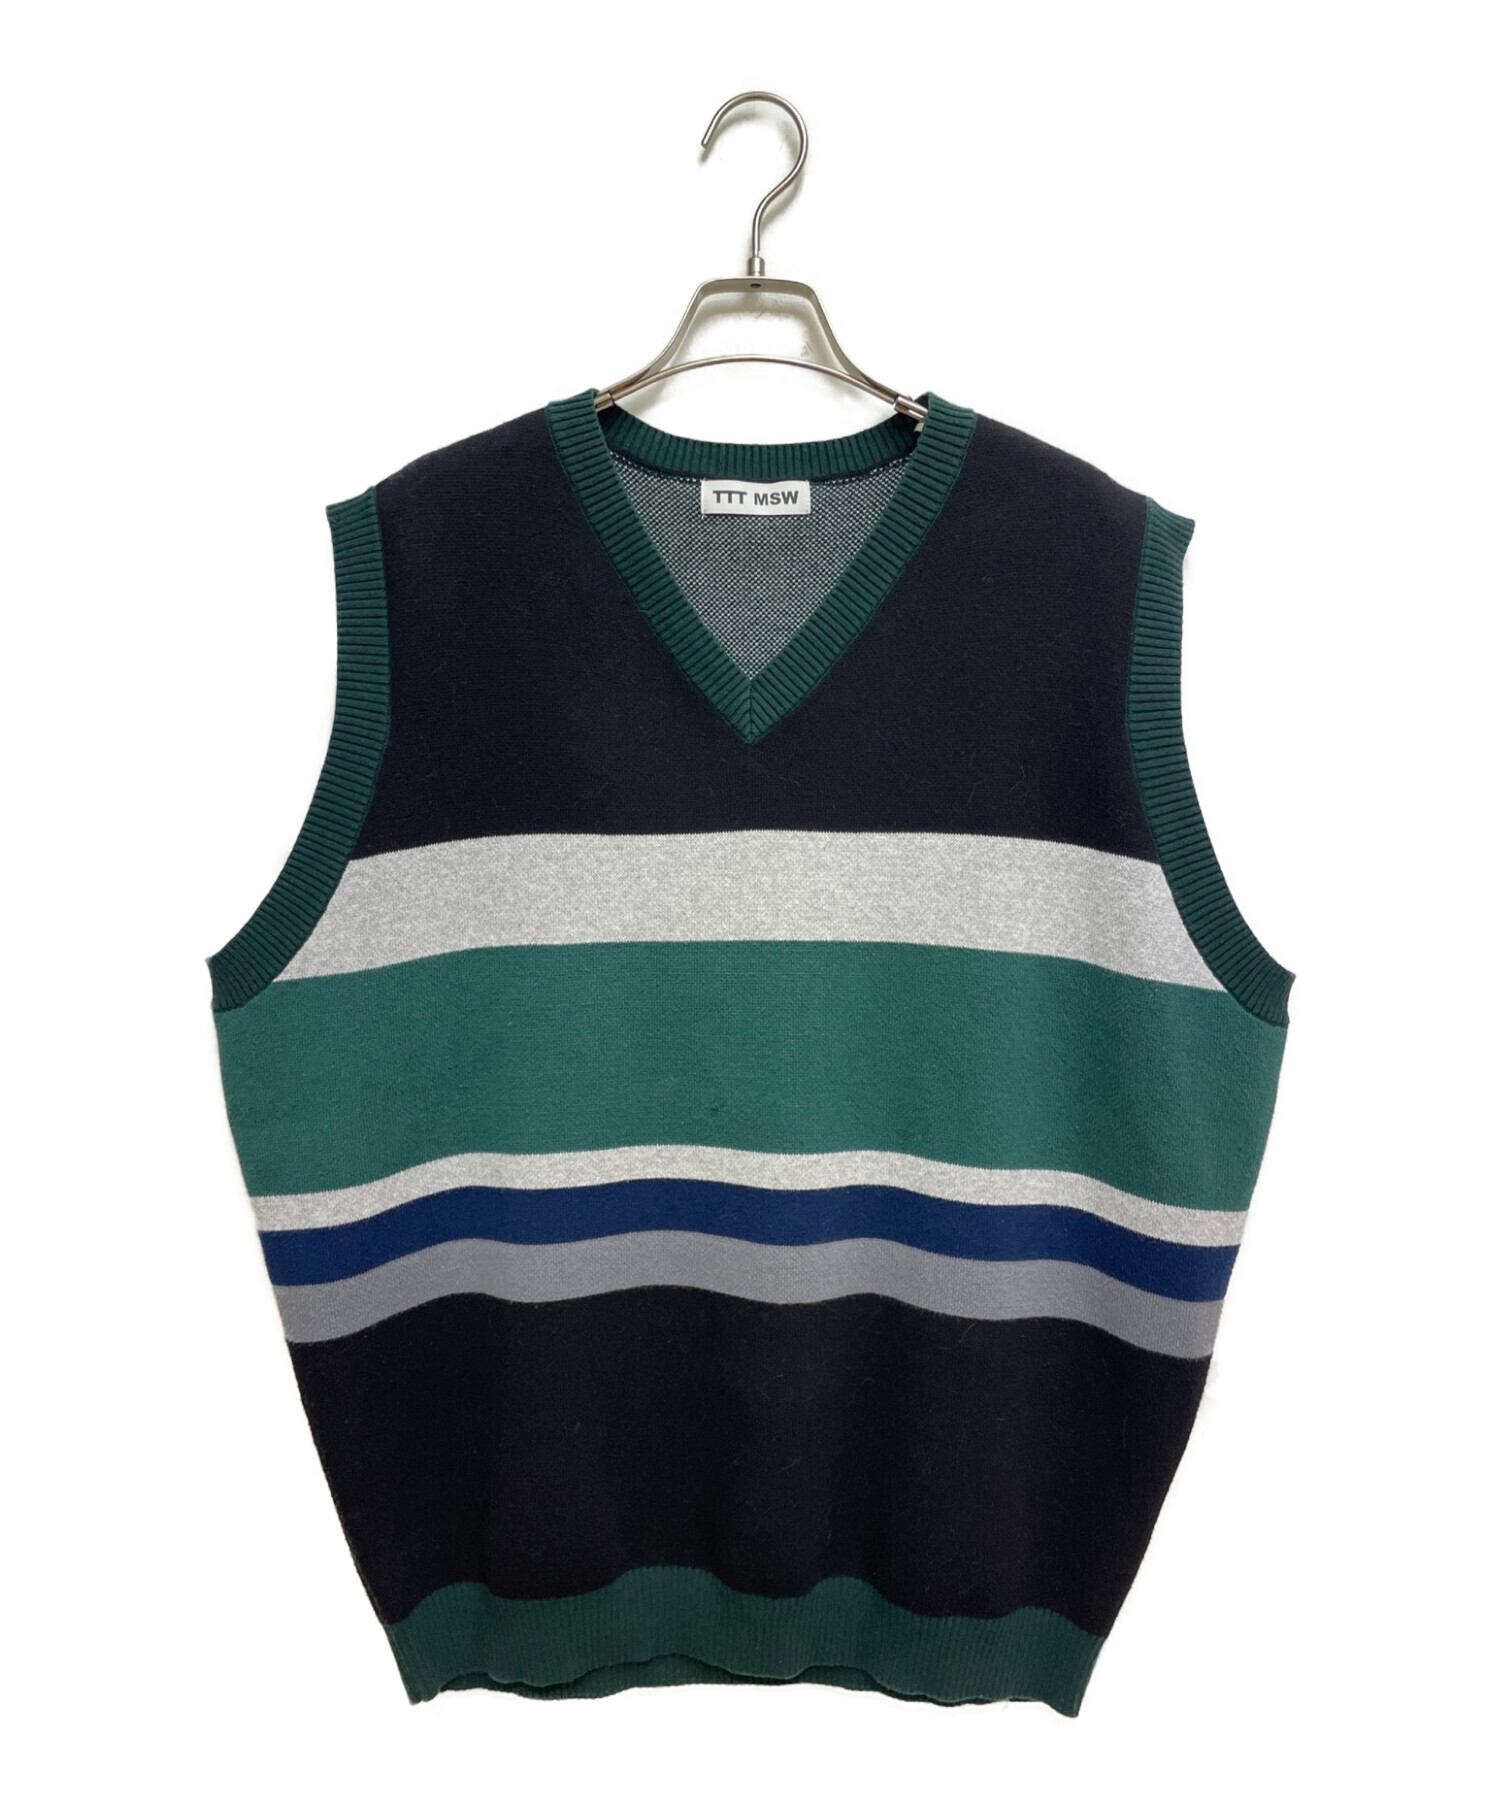 TTT MSW (ティーモダンストリートウェア) 22AW Border knit vest グリーン×ブラック サイズ:XL